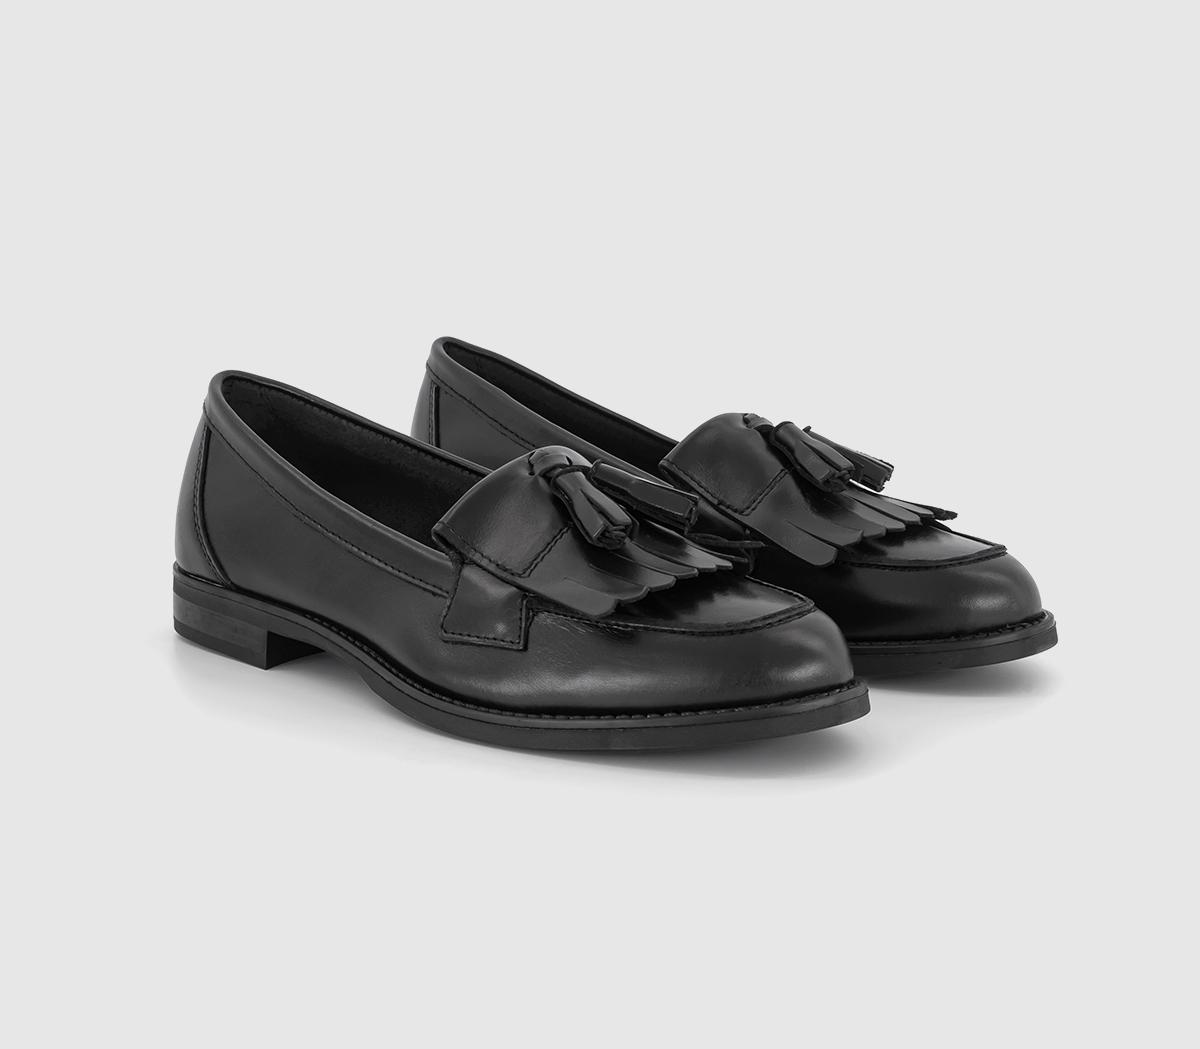 OFFICE Womens Fitz Tassle Fringe Loafers Black Leather, 8